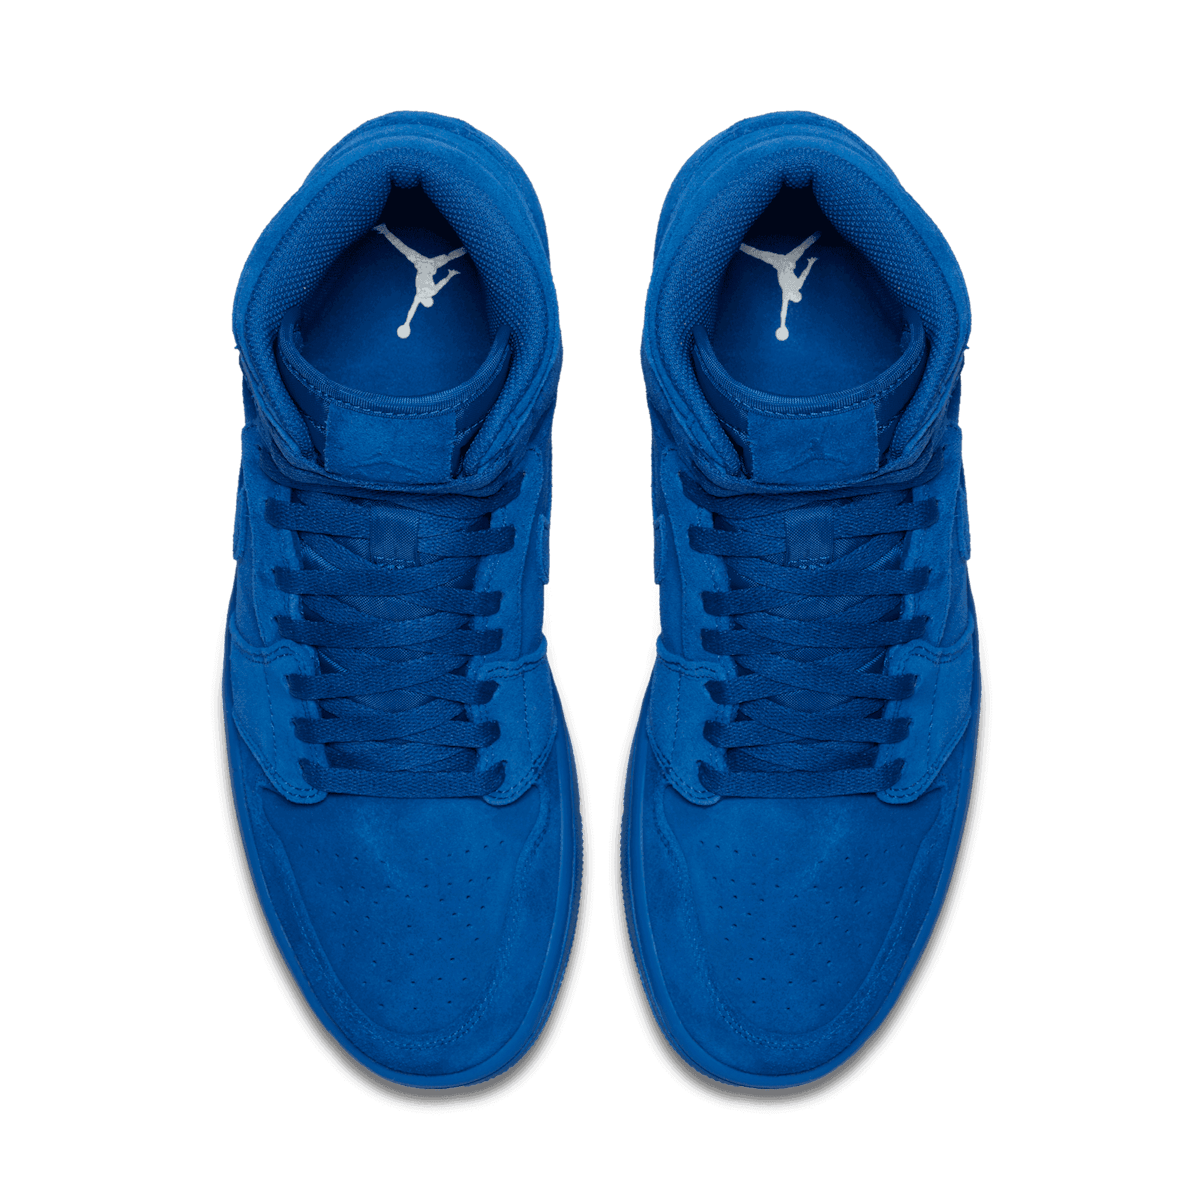 Nike 1 Retro Blue Suede - Blue - Hi-Top Sneakers